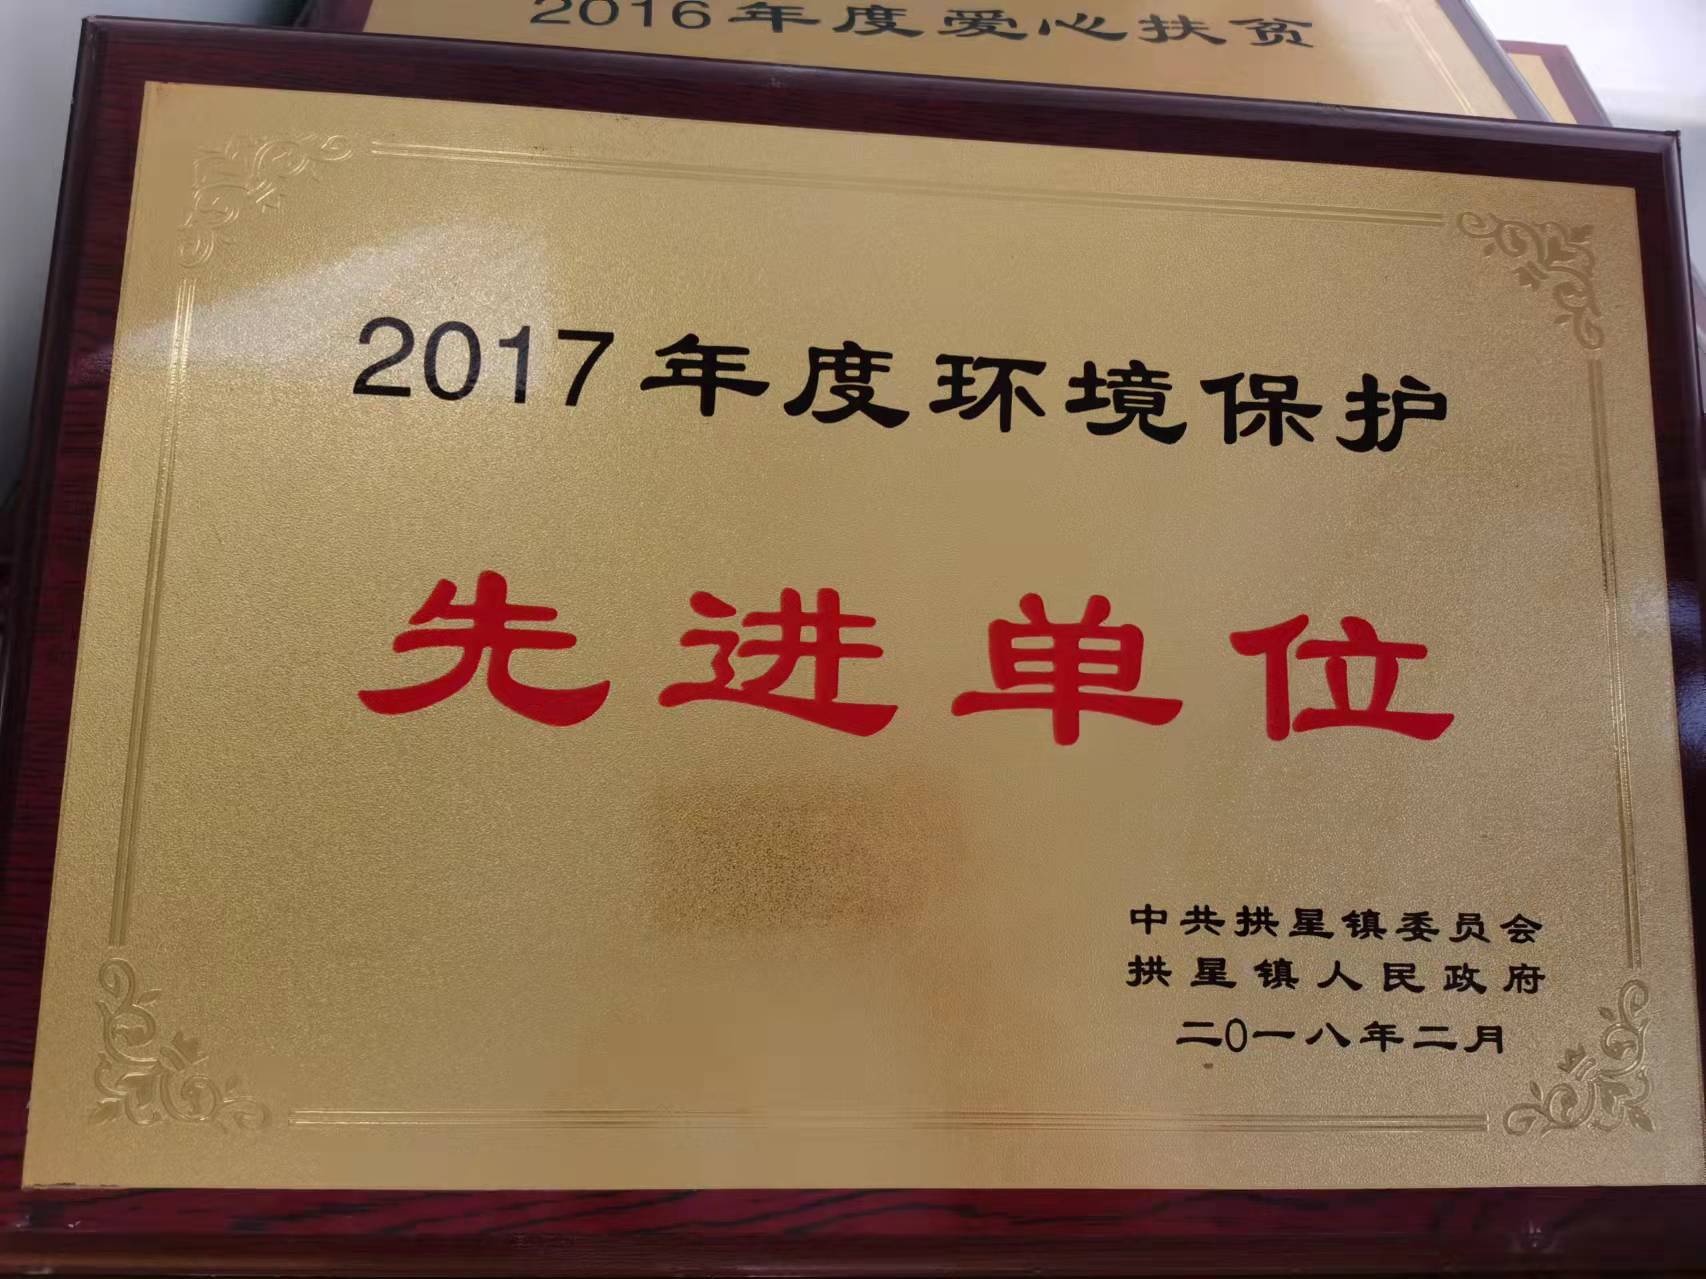 Zhiyuan 2017 Environmental Protection Advanced Unit